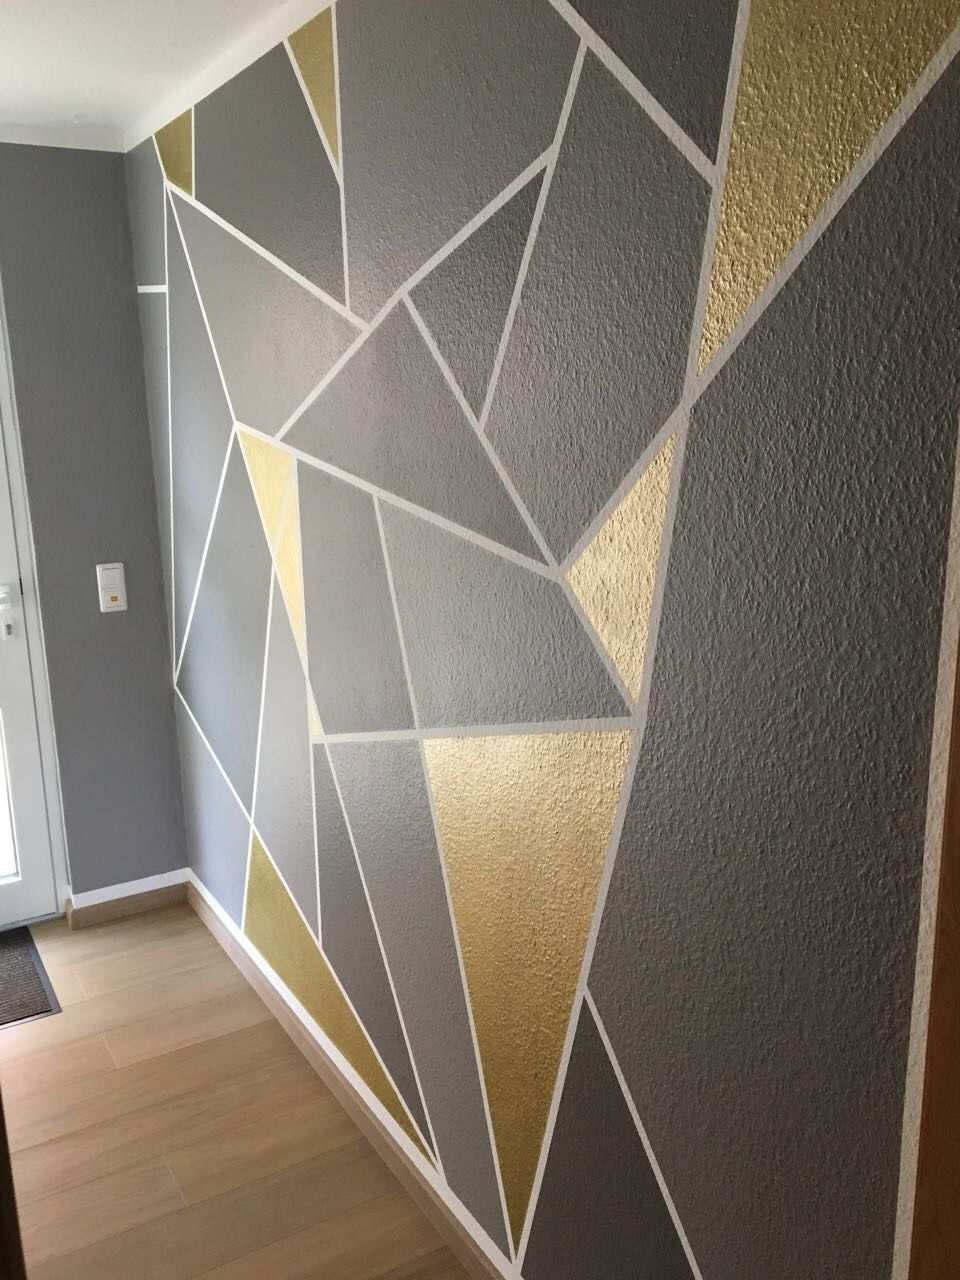 Geometrisches Wand Design Wand Muster Wand Muster Bedroom Wall Designs Bedroom Wall Paint Geometric Decor